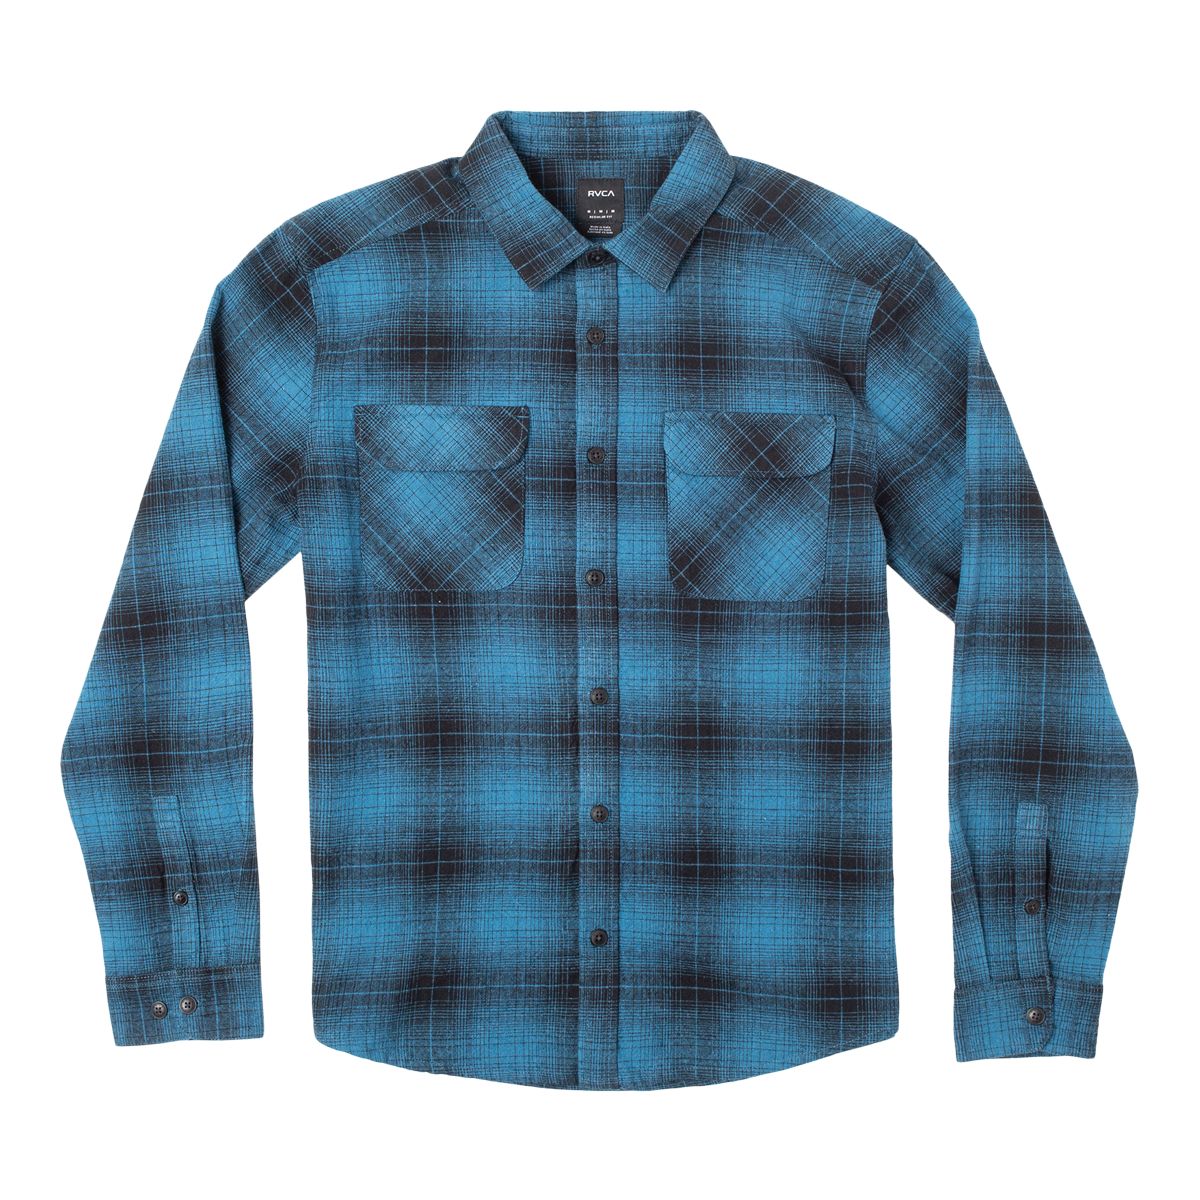 Rvca Men's Vesuvio Flannel Long Sleeve Shirt